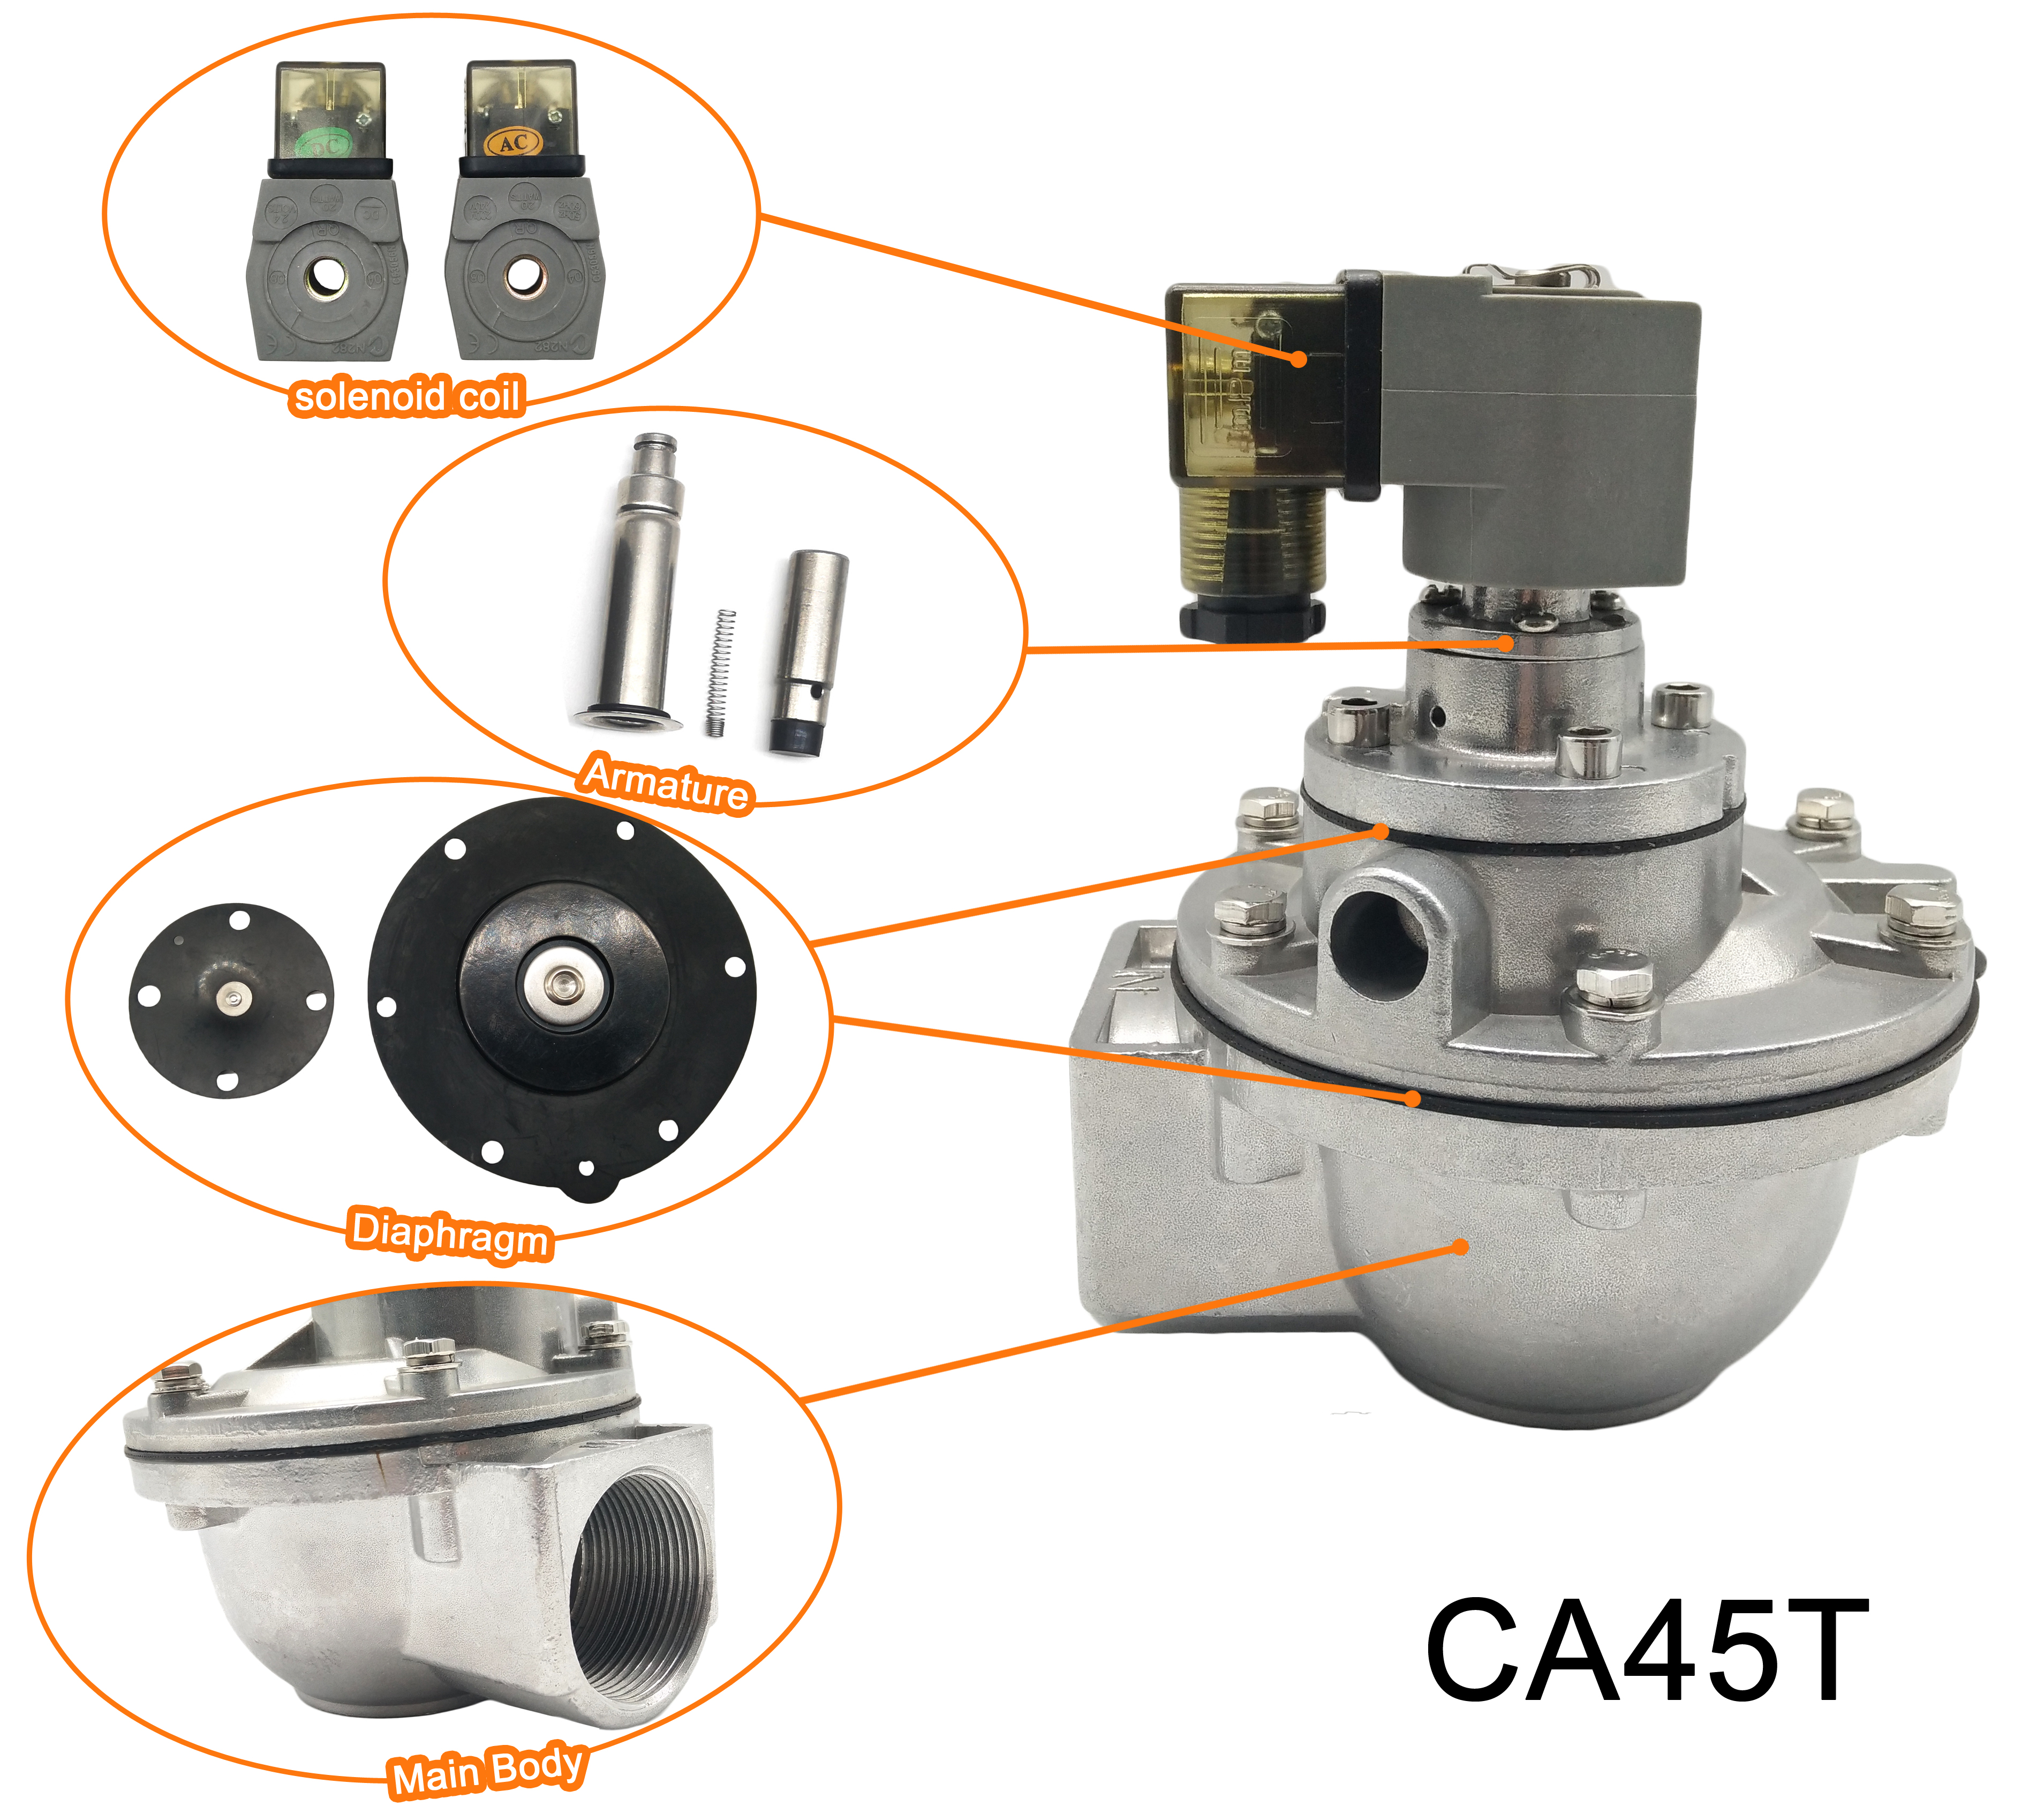 Deconstruction of CA45T